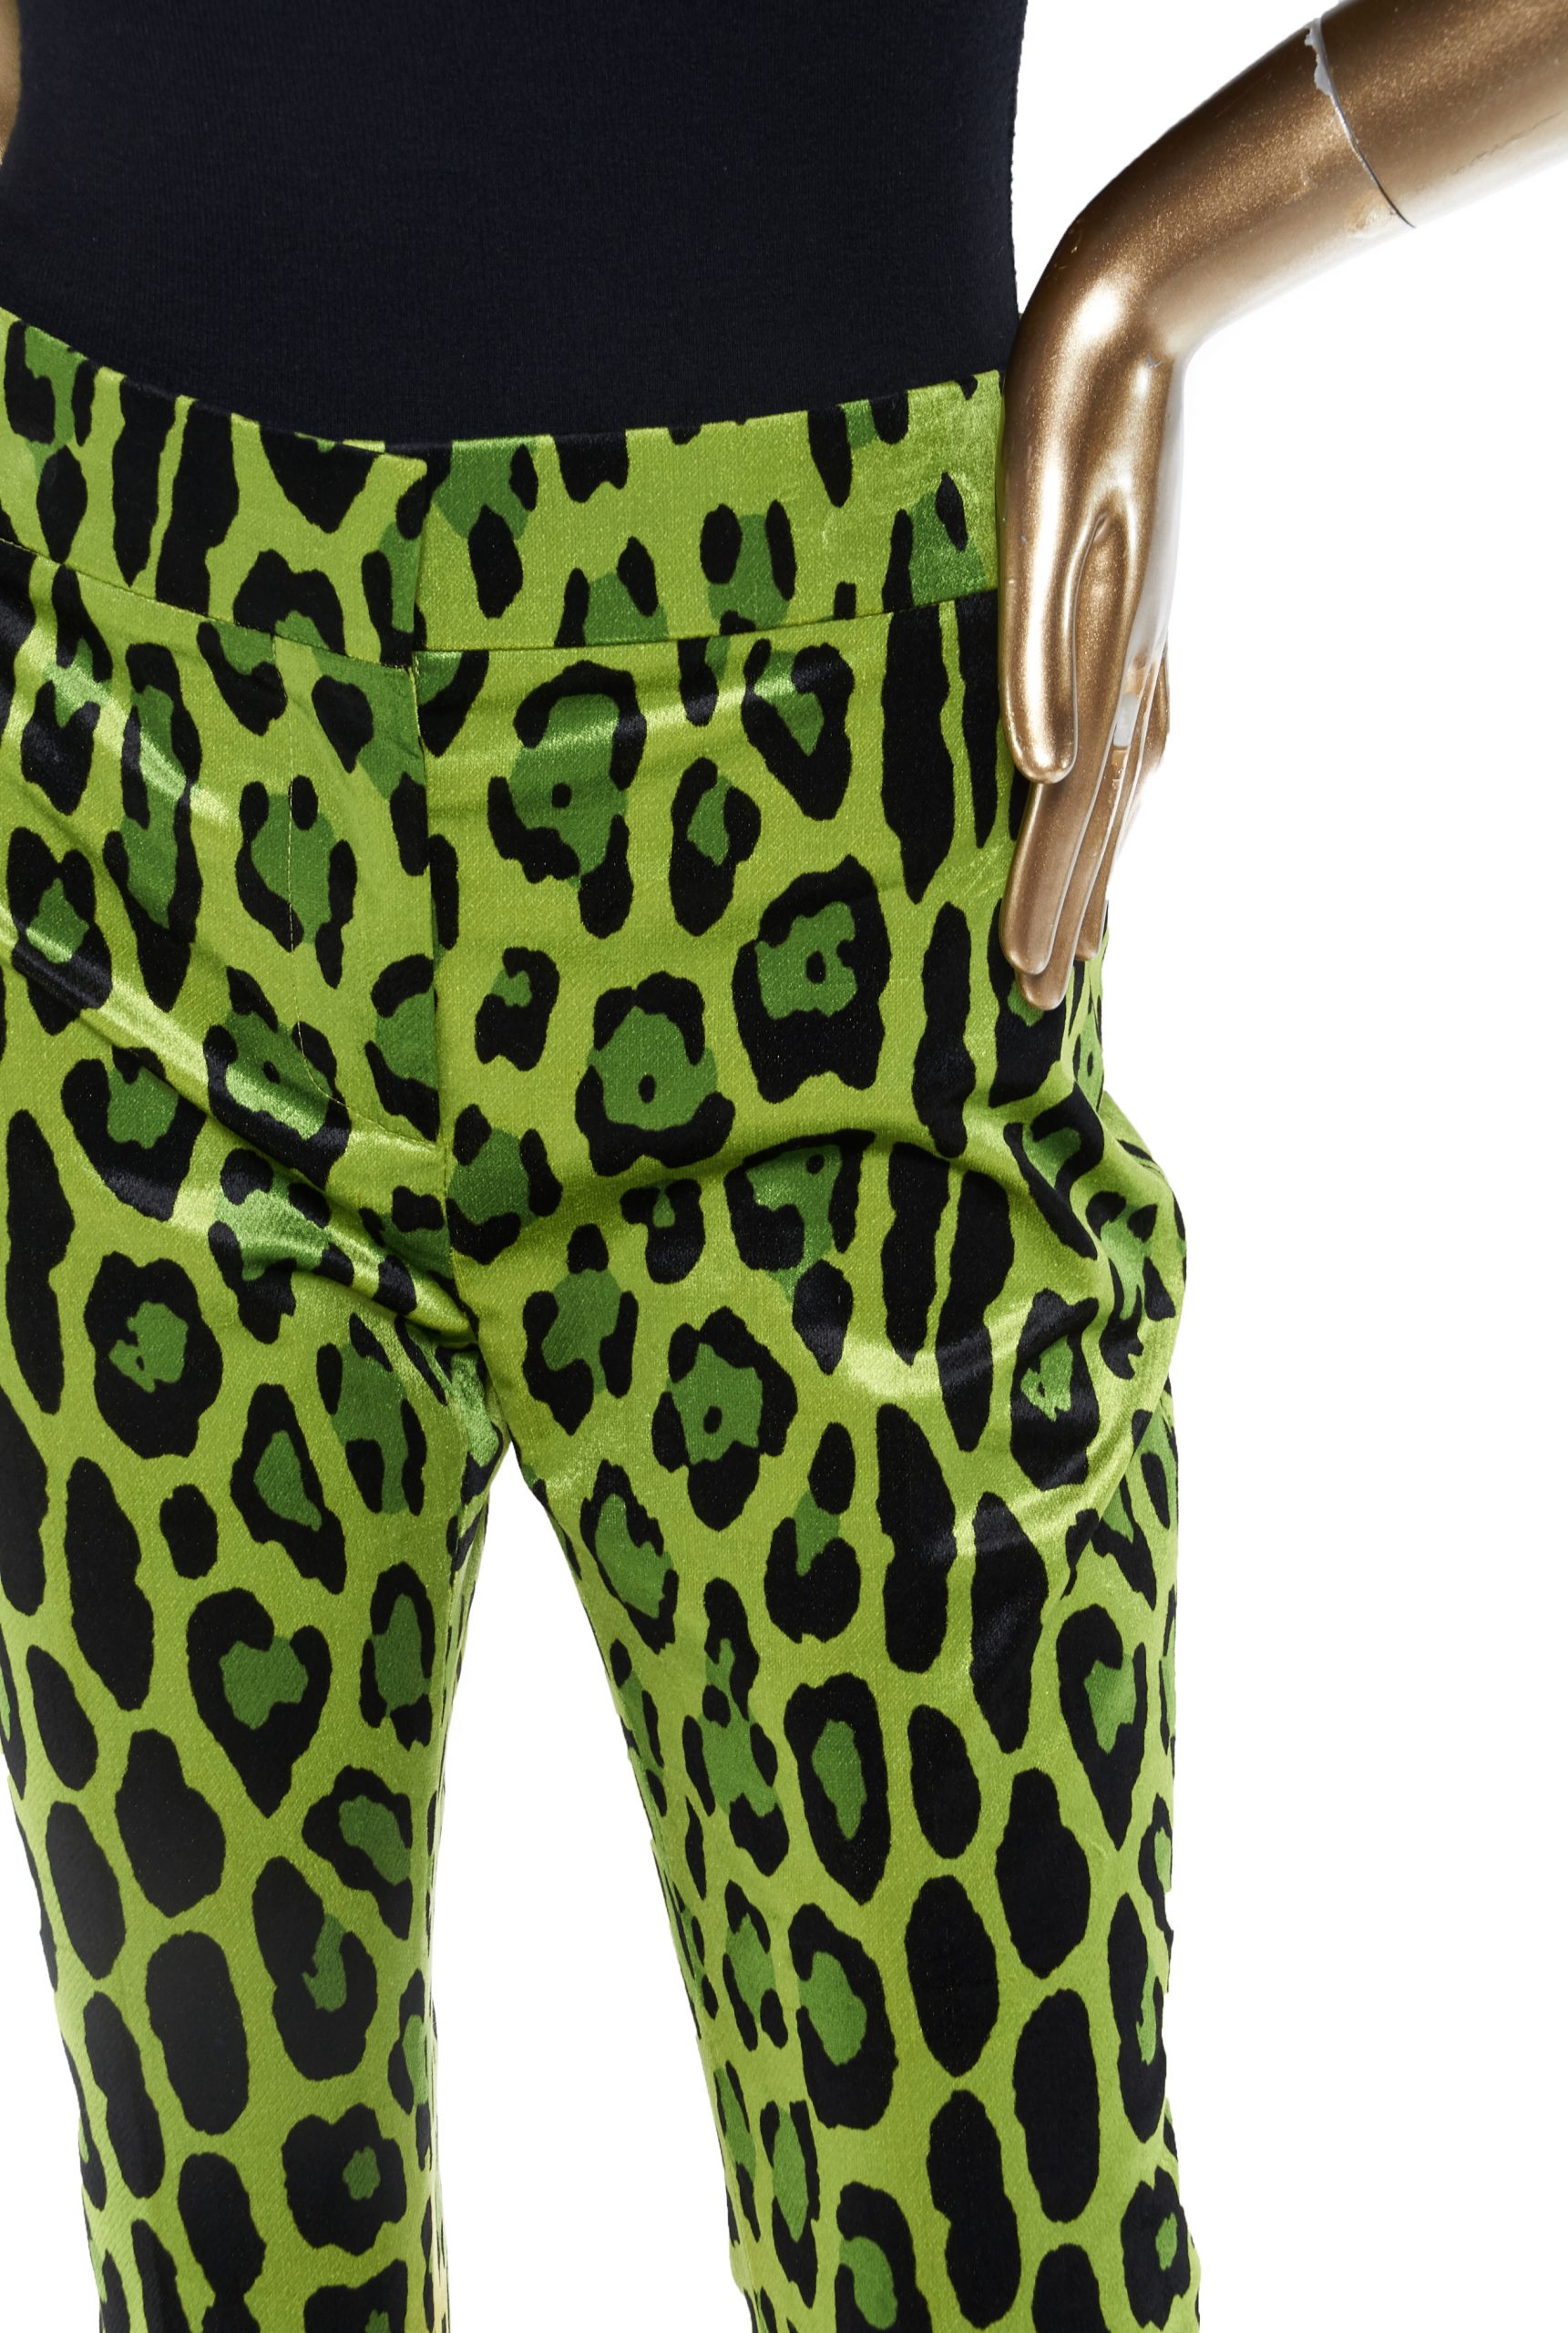 Tom Ford Green Leopard Print Pants - Janet Mandell